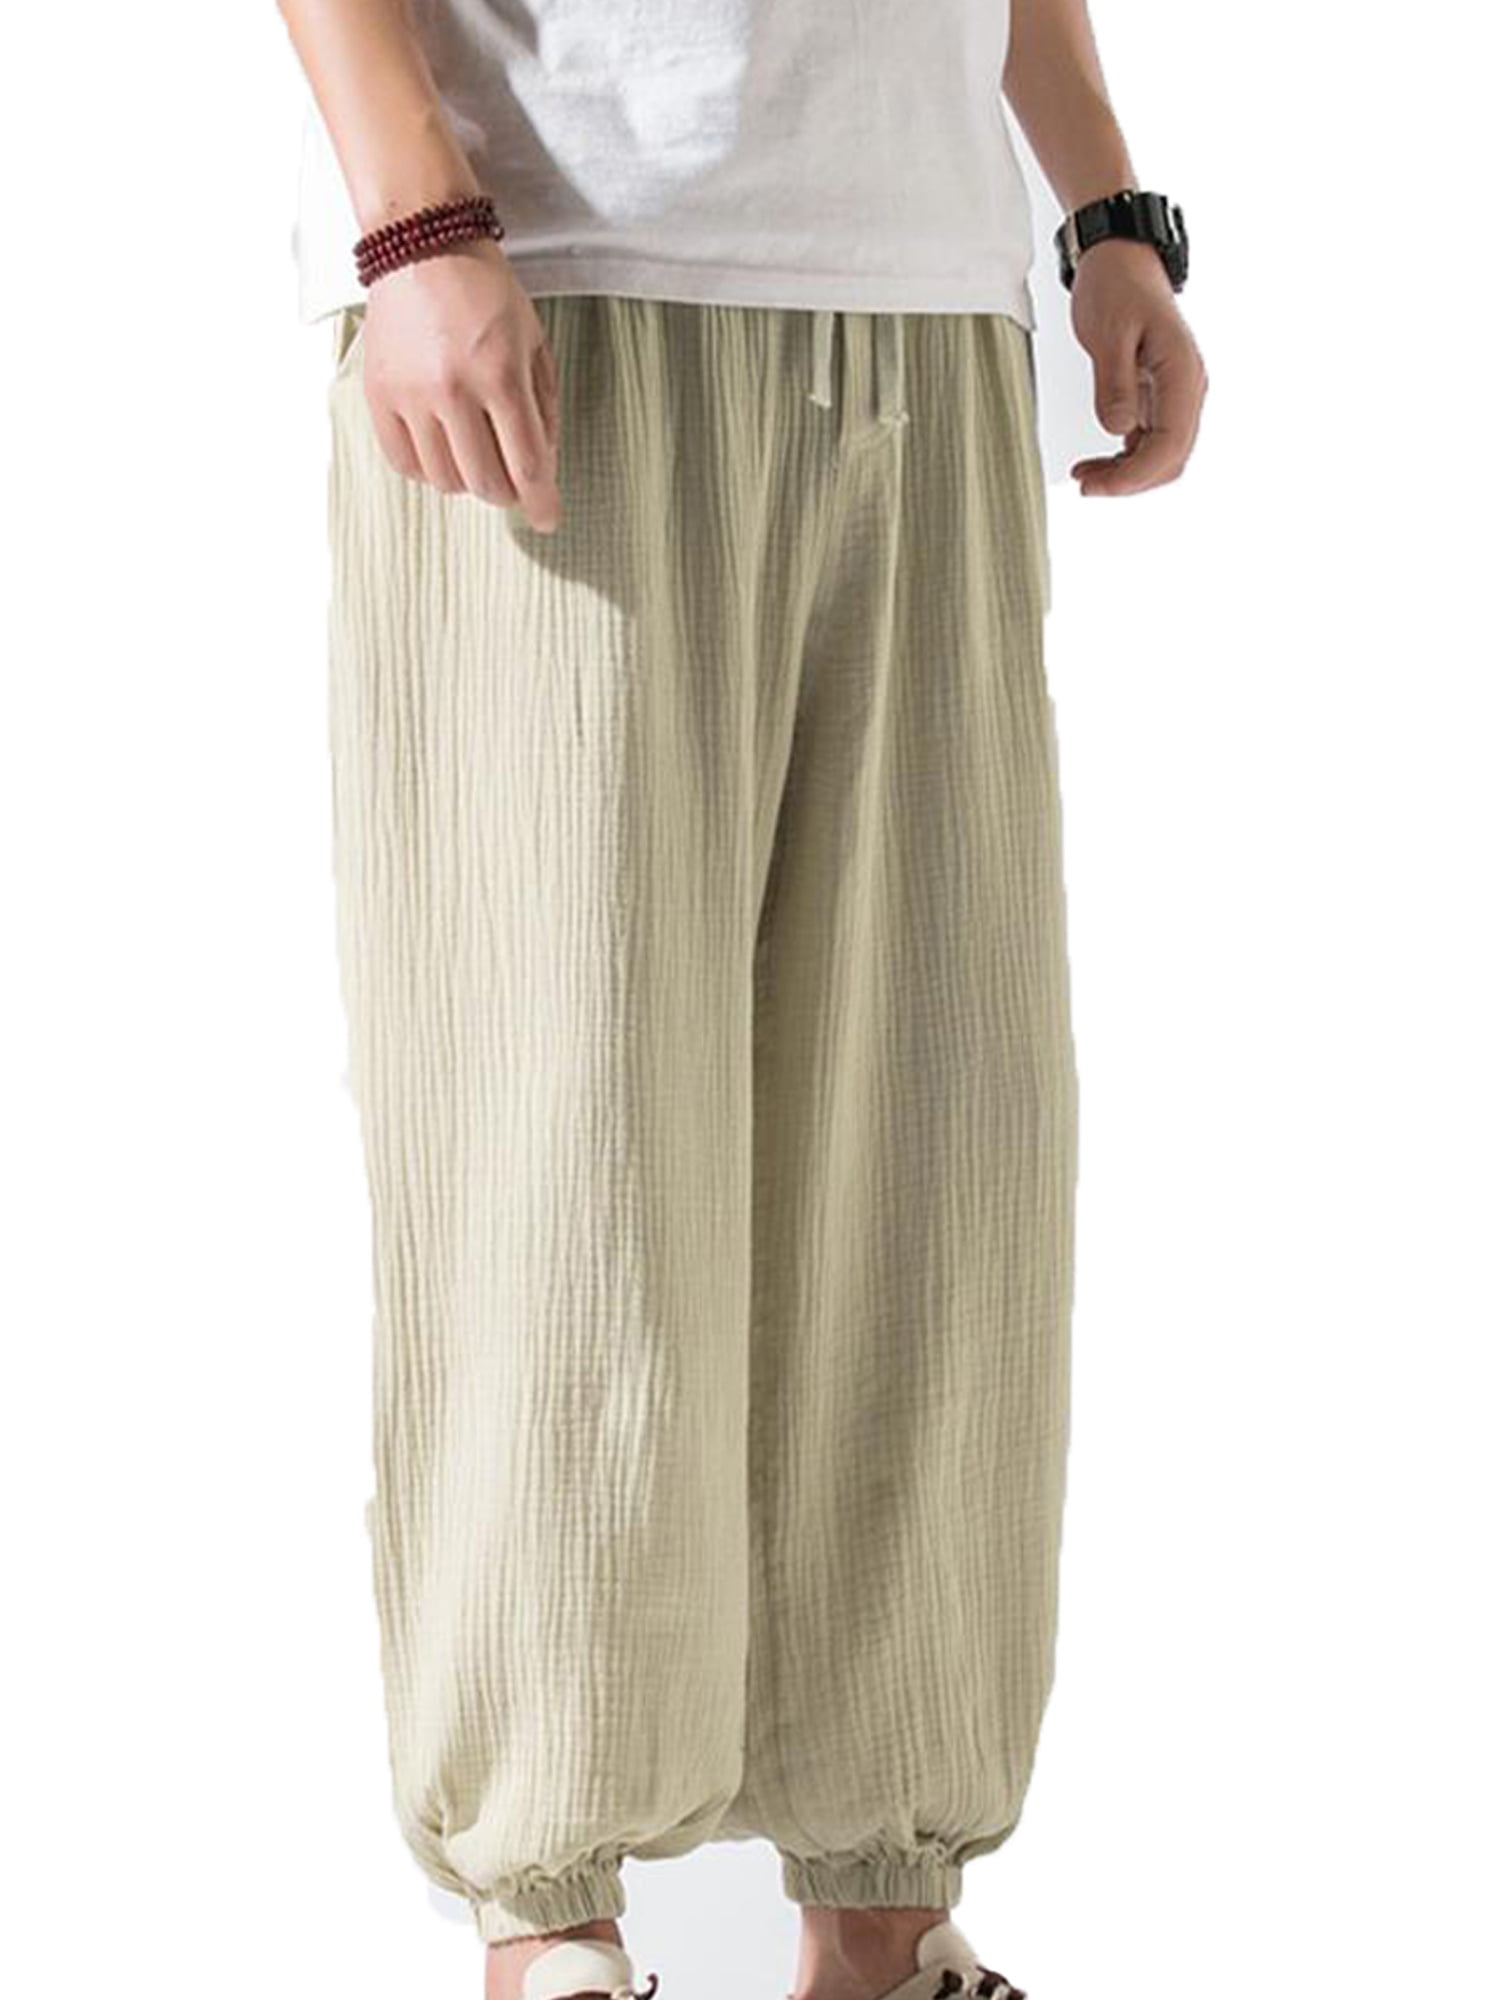 Men's Casual Cotton Linen Harem Pants Hippy Yoga Holiday Drawstring Trousers New 